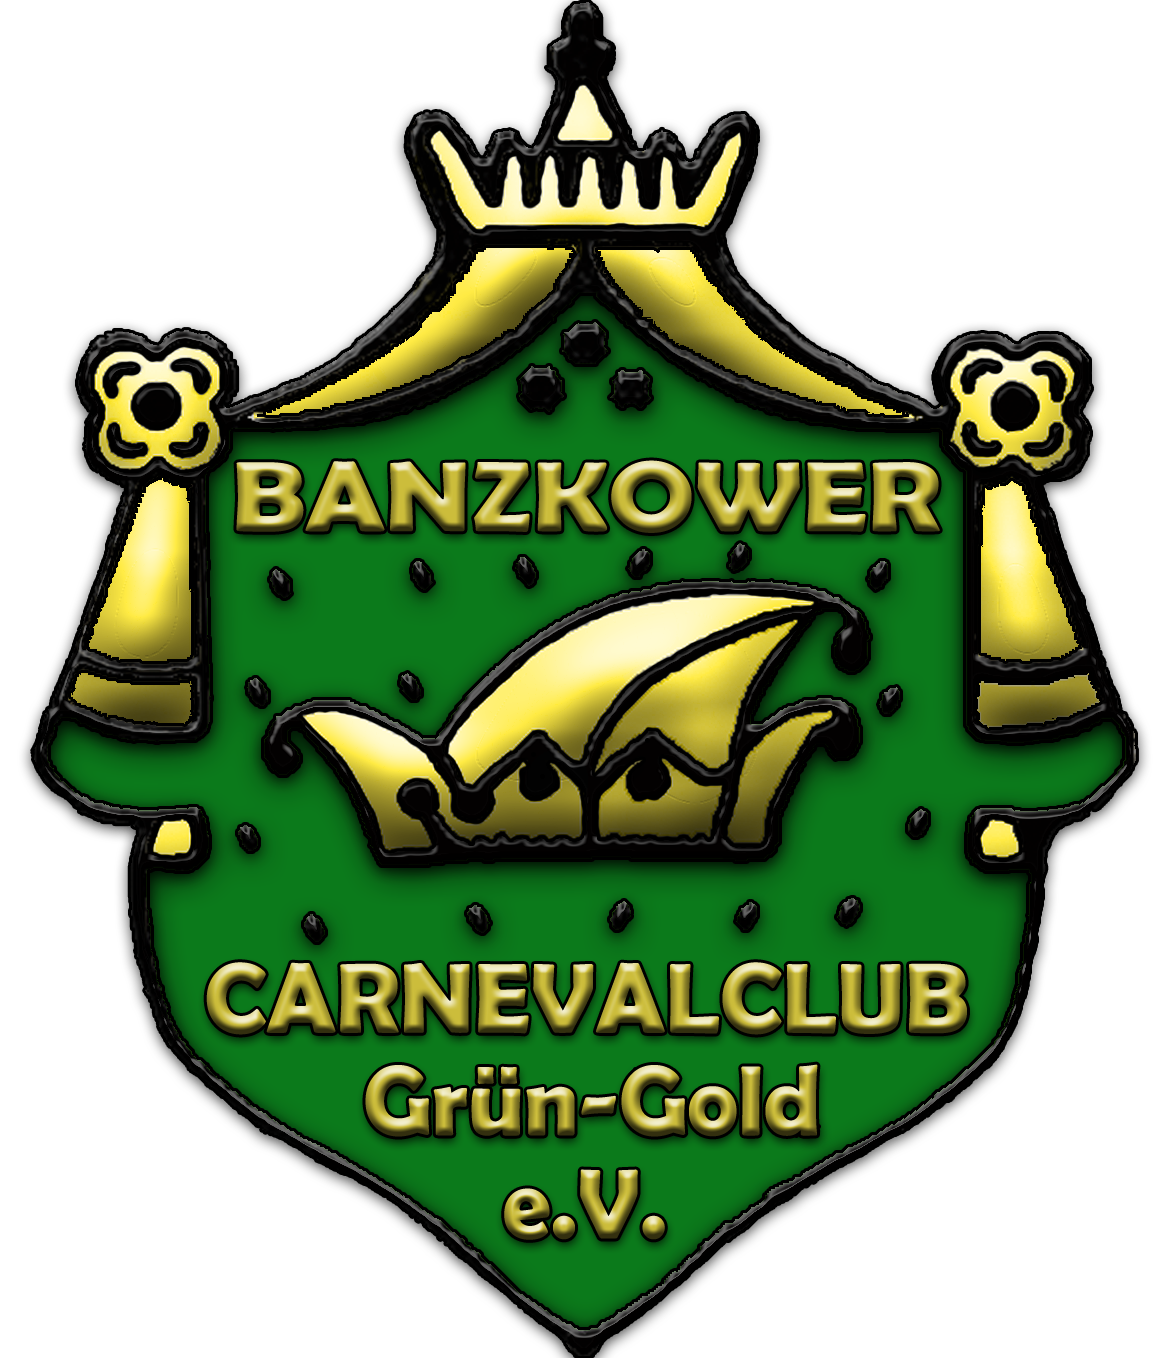 Banzkower Carneval Club